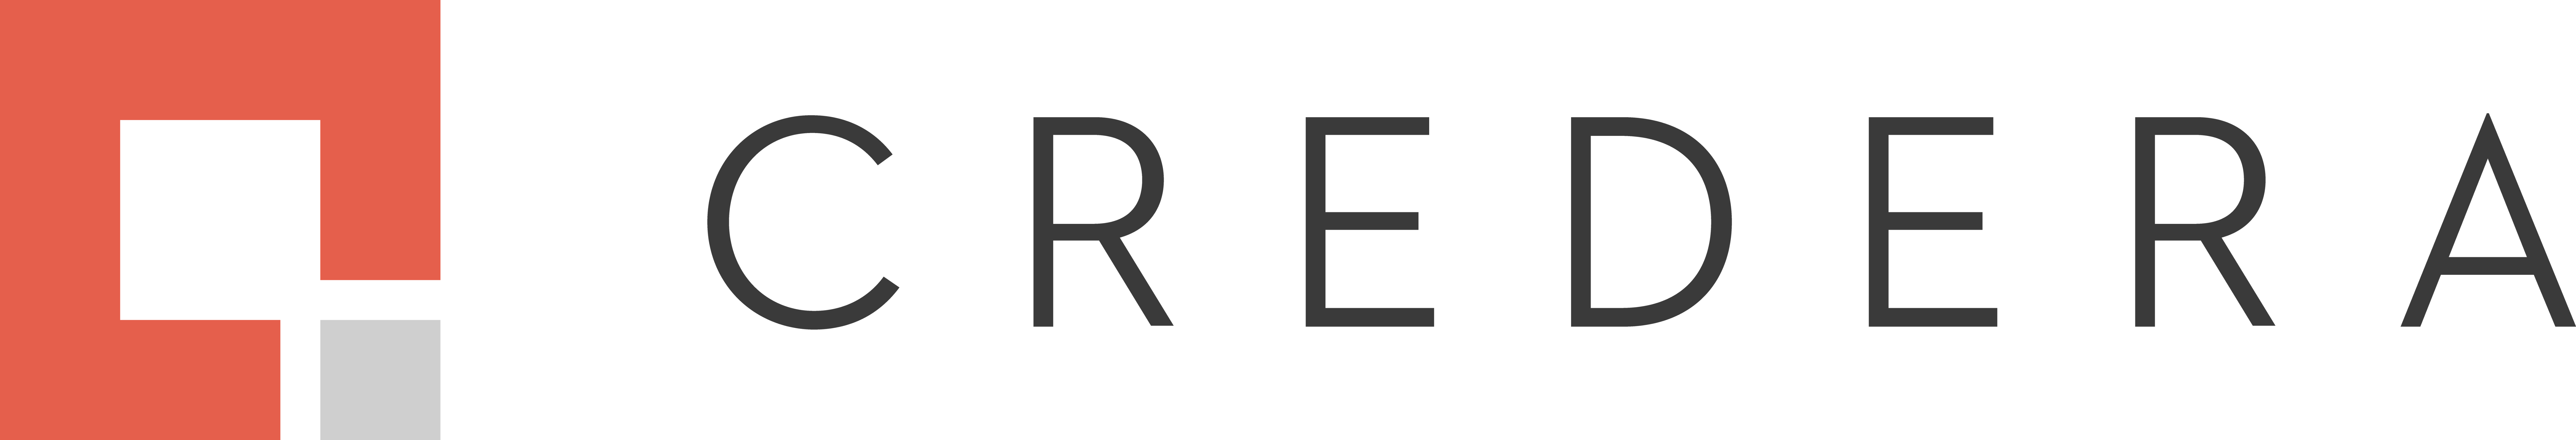 Smart Digital - A Credera Company logo